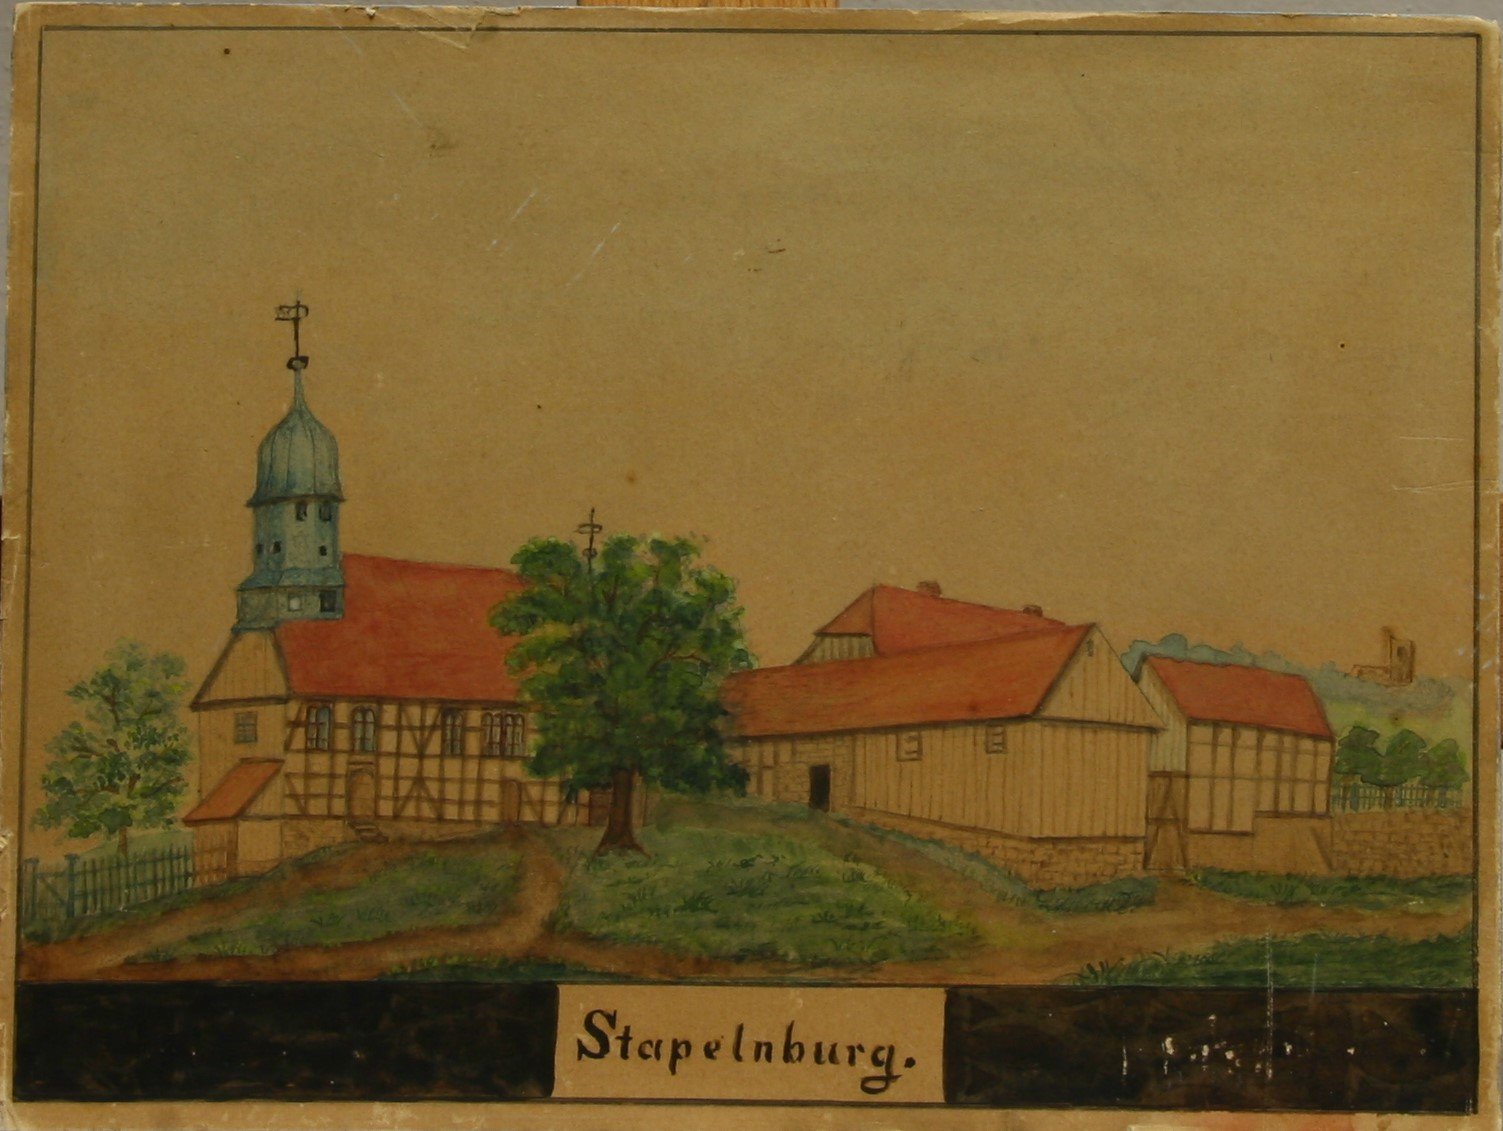 Kirche in Stapelburg (Stapelnburg) (Harzmuseum Wernigerode CC BY-NC-SA)